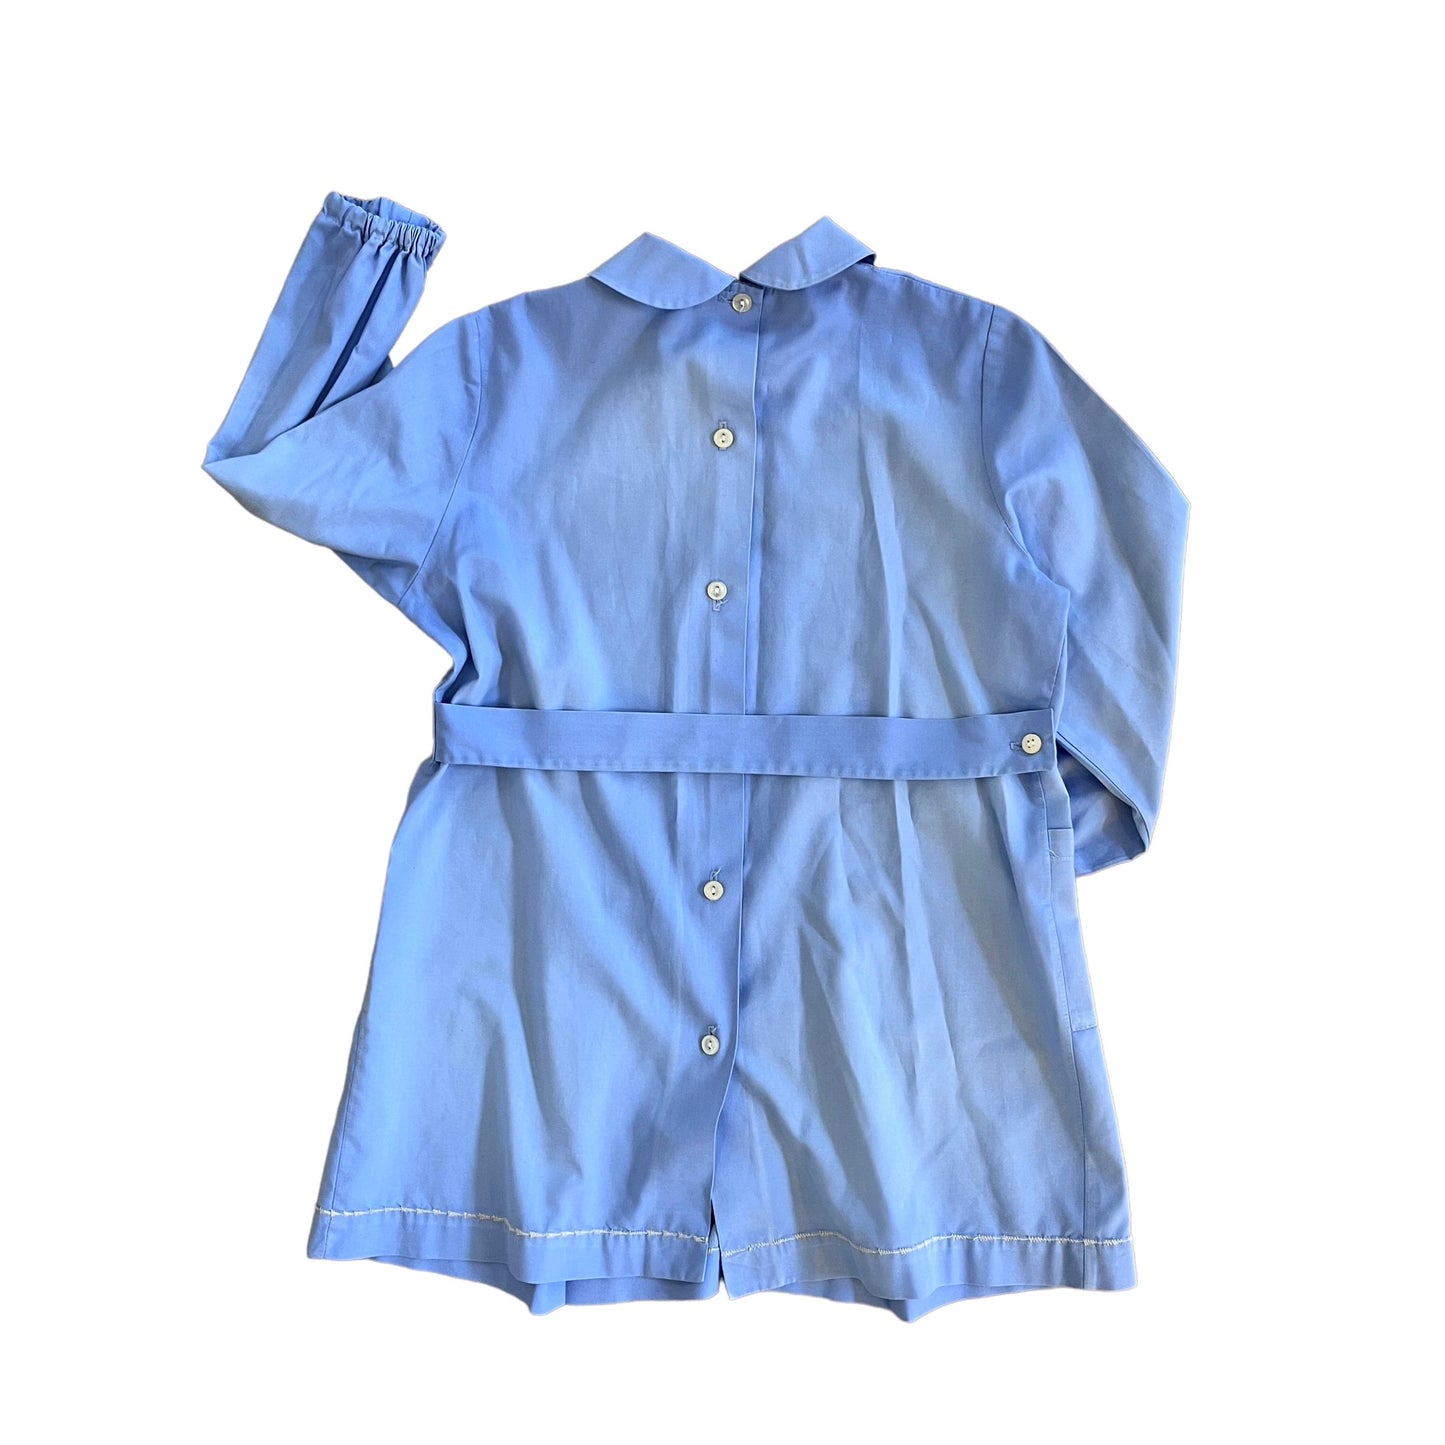 Vintage 1960's Blue School Blouse / Shirt /  5-6 Years